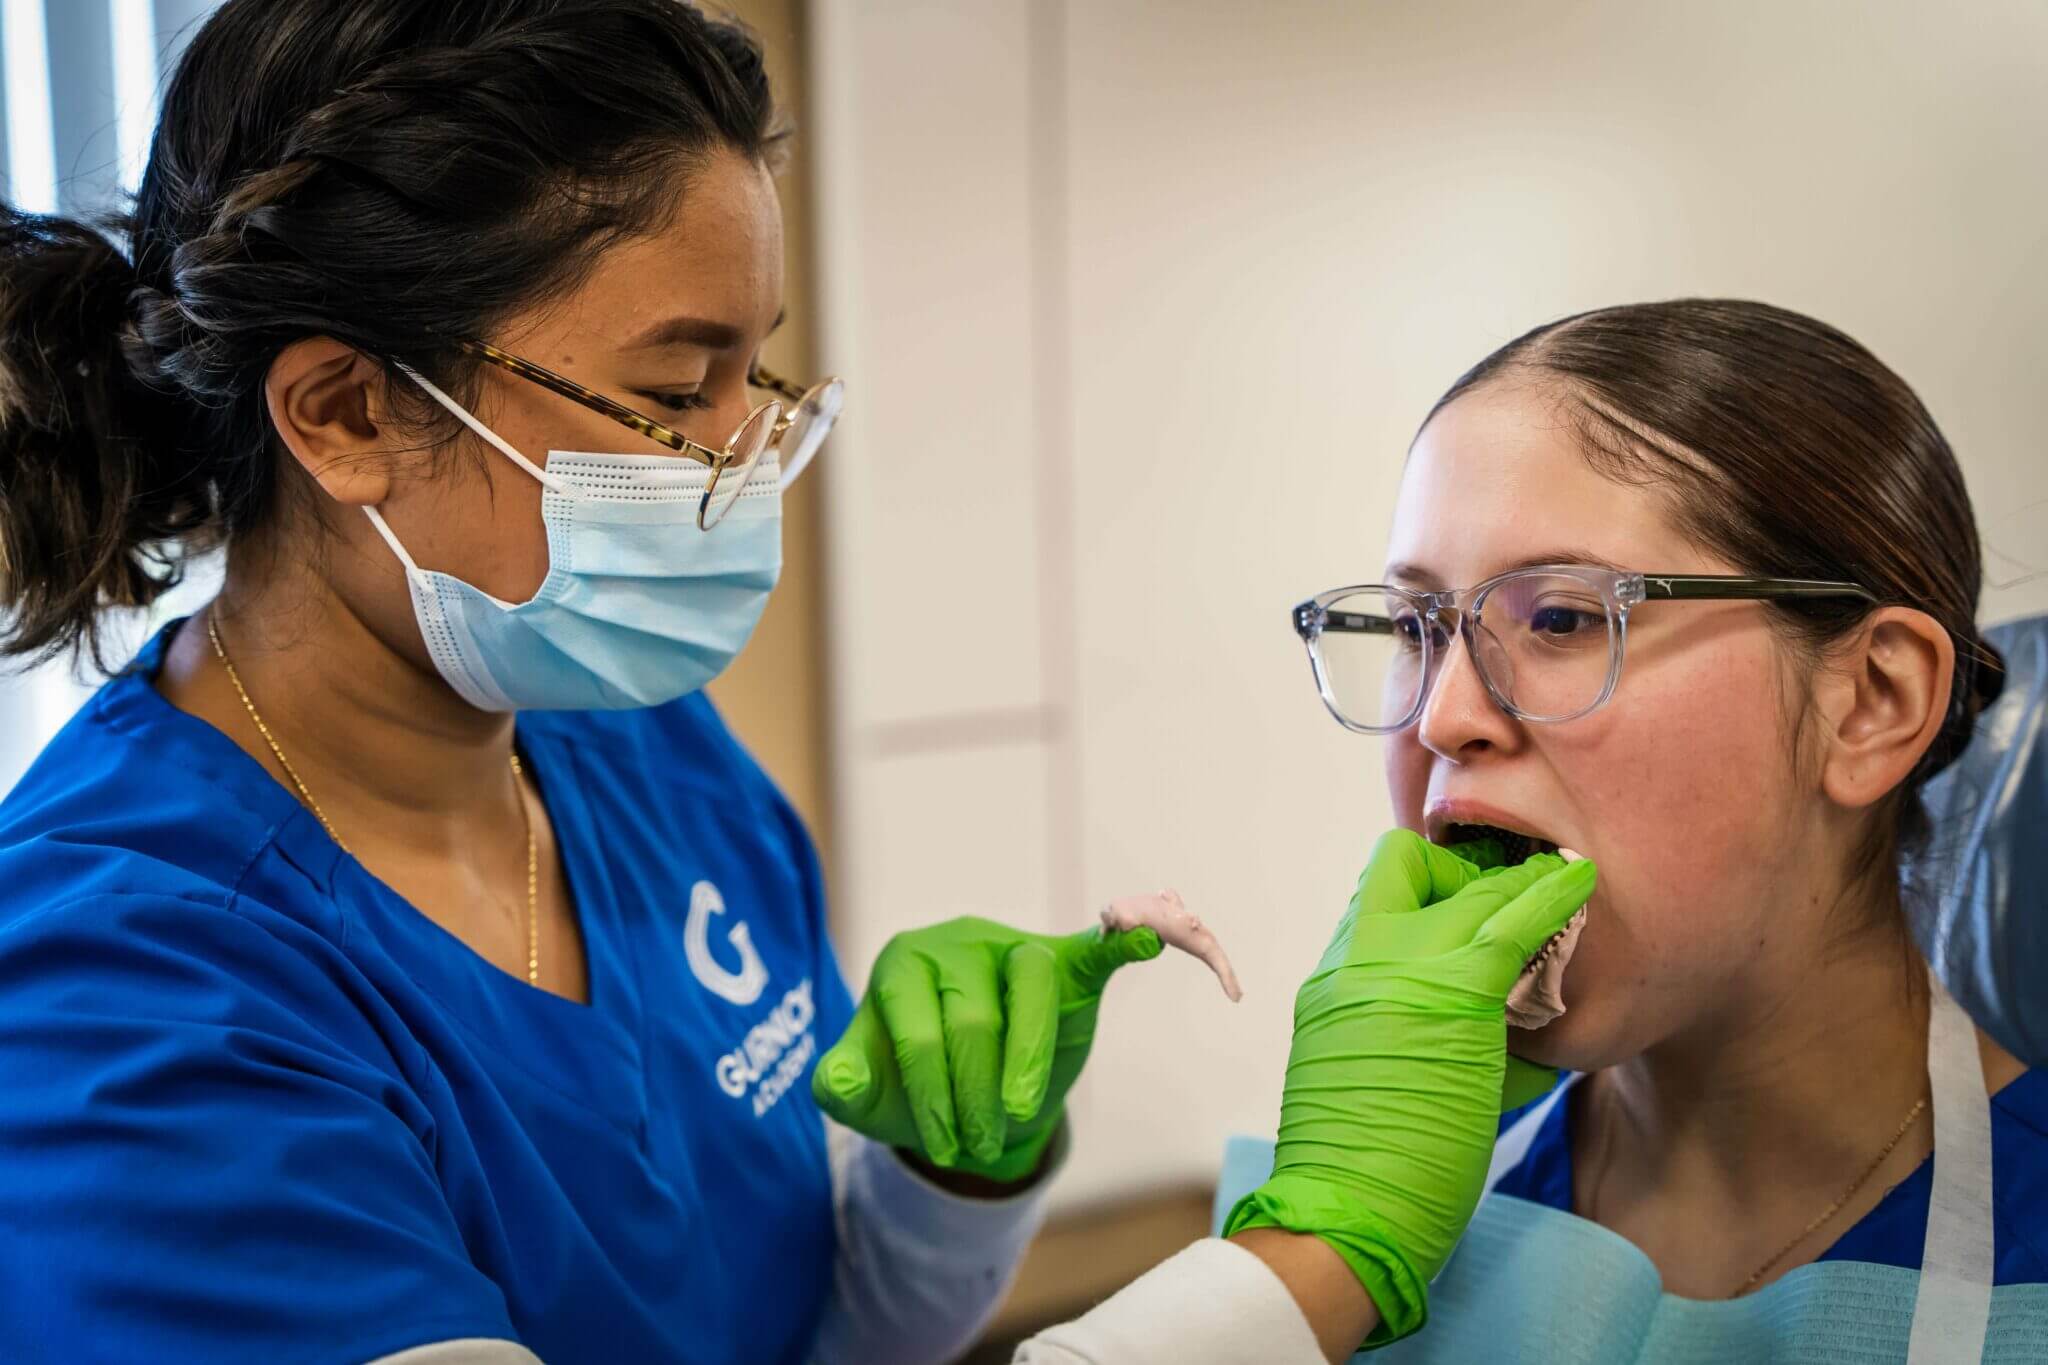 Dental Assistants Perform A Variety of Tasks | Gurnick Academy of Medical Arts